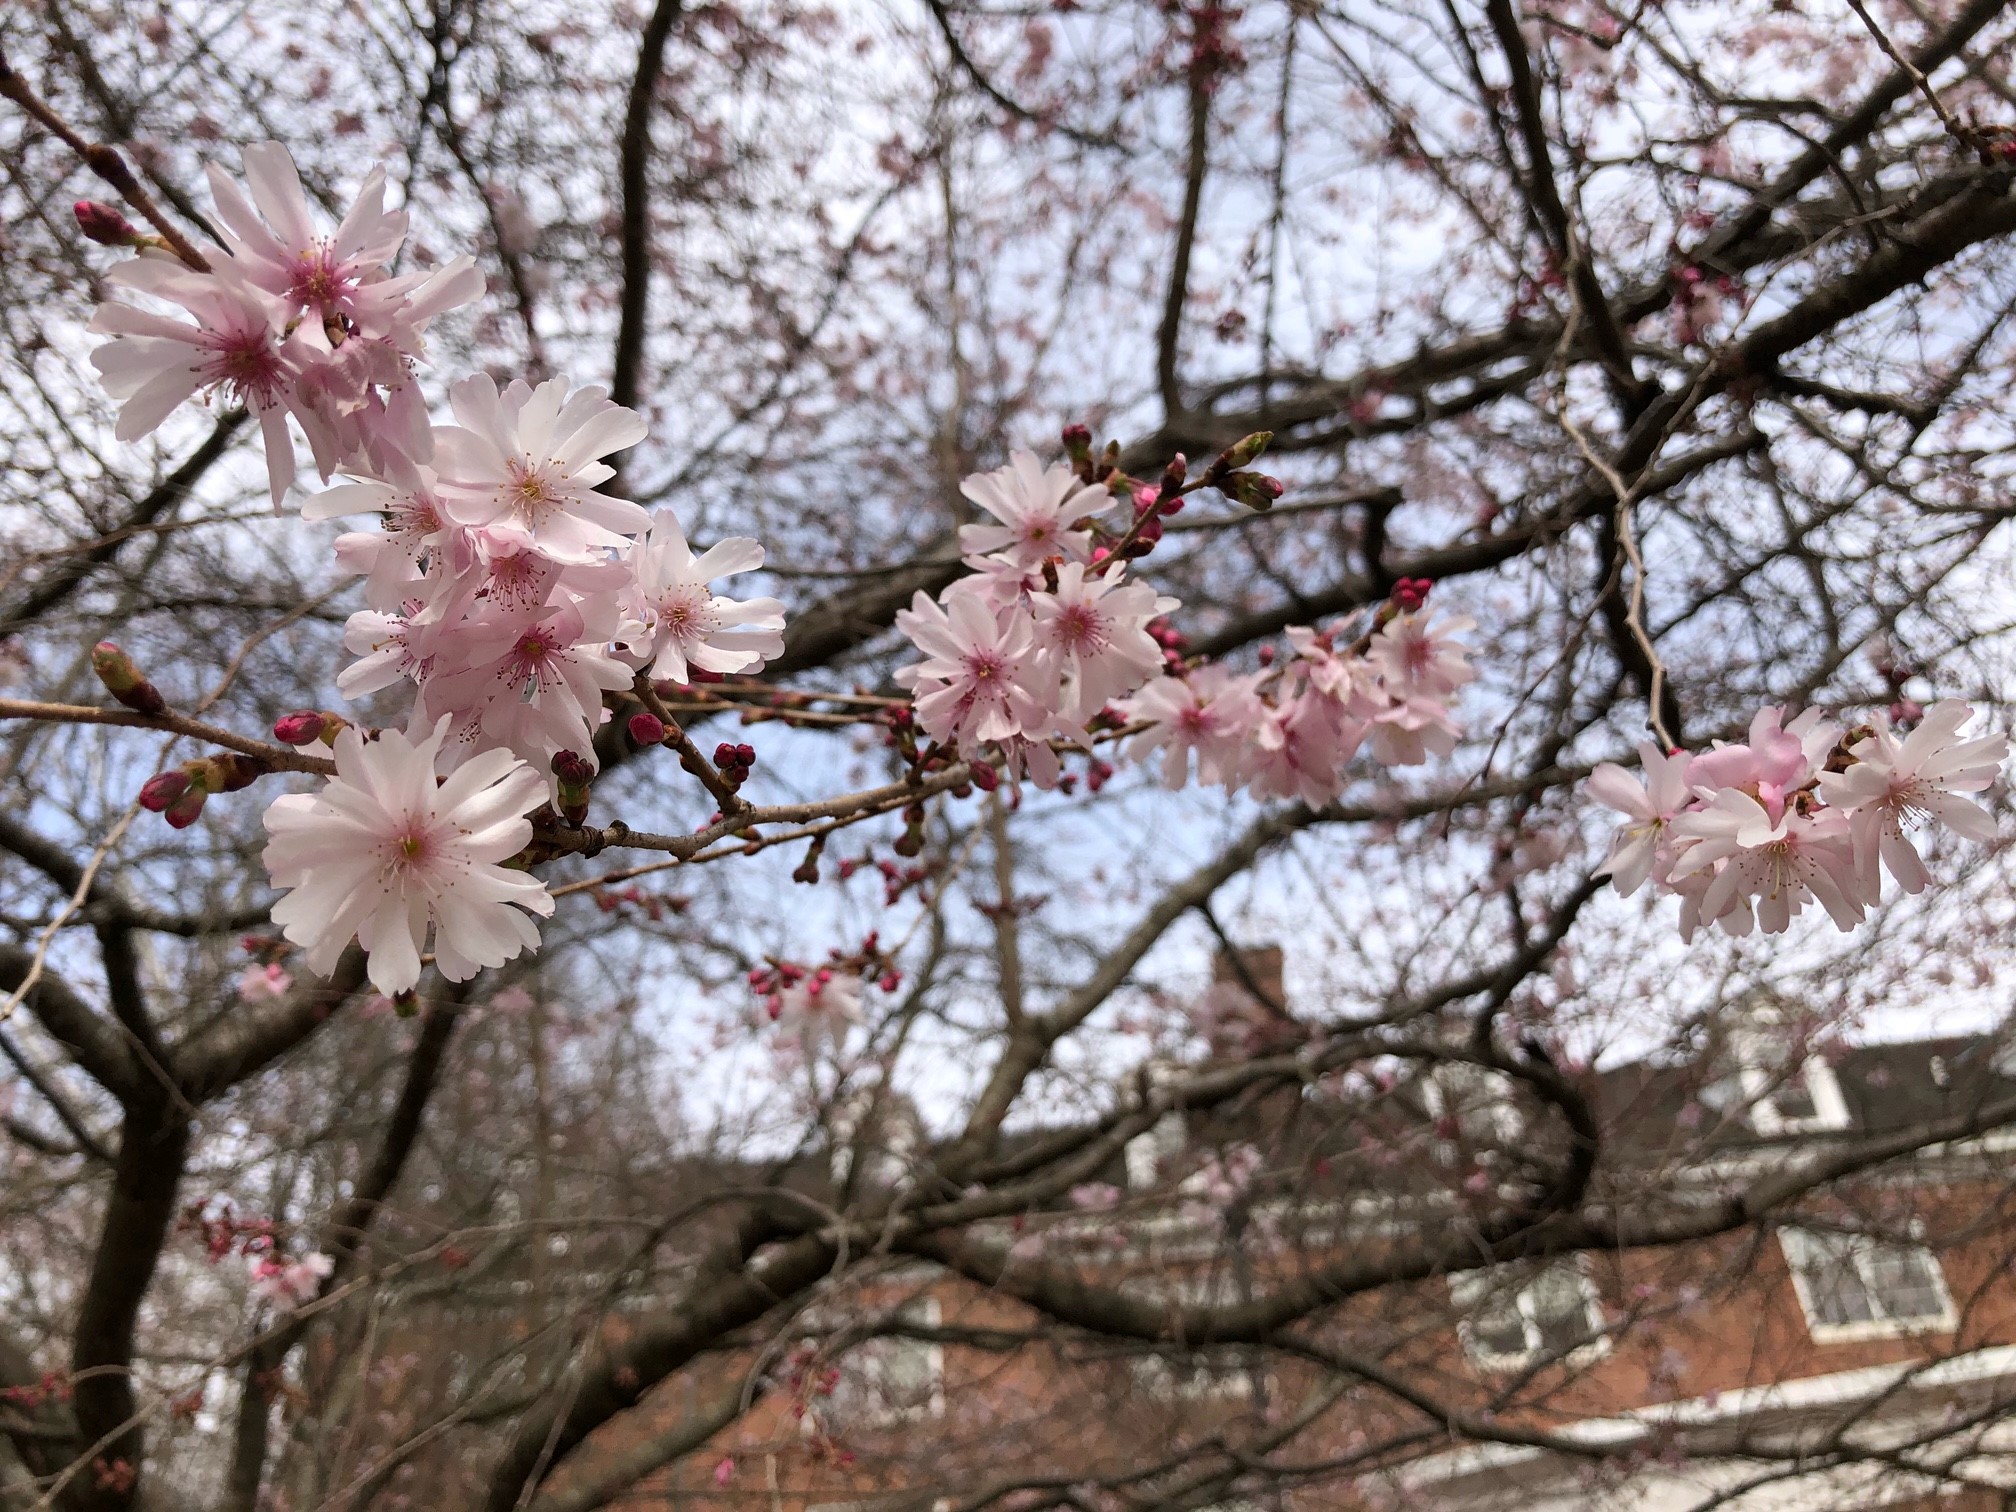 Cherry Blossoms at Ohio University Ohio University